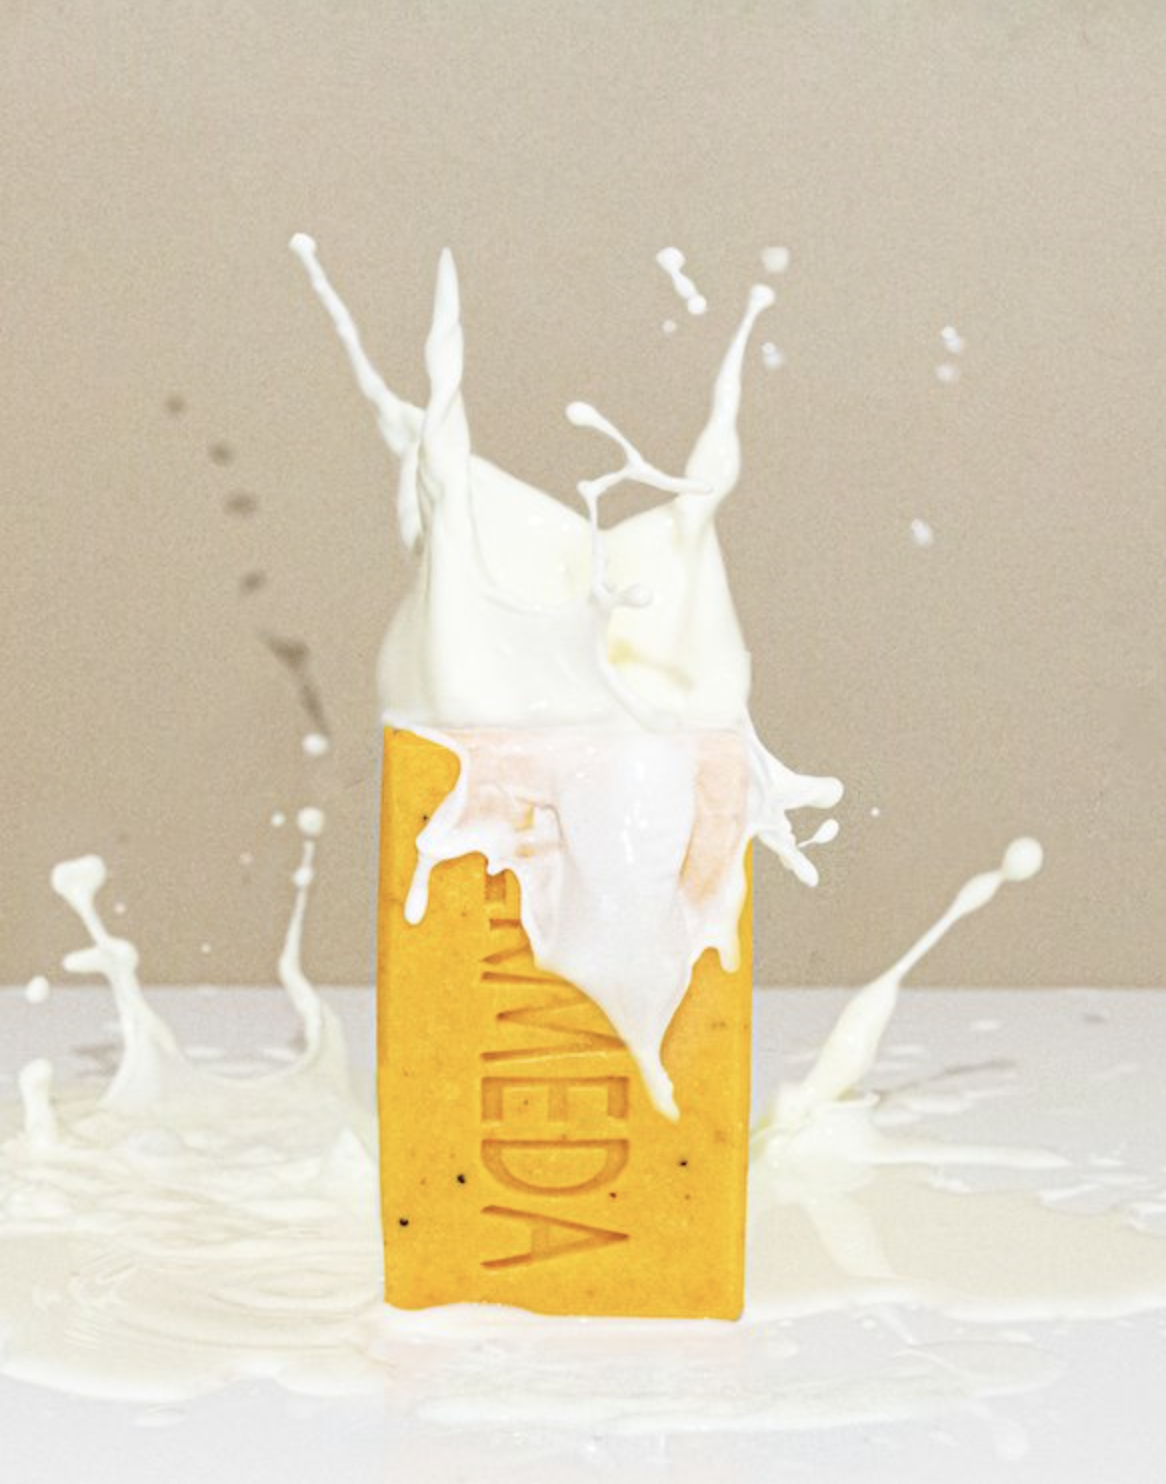 Aermeda Goats Milk Soap - Annatto Citrus and Poppy Scrub